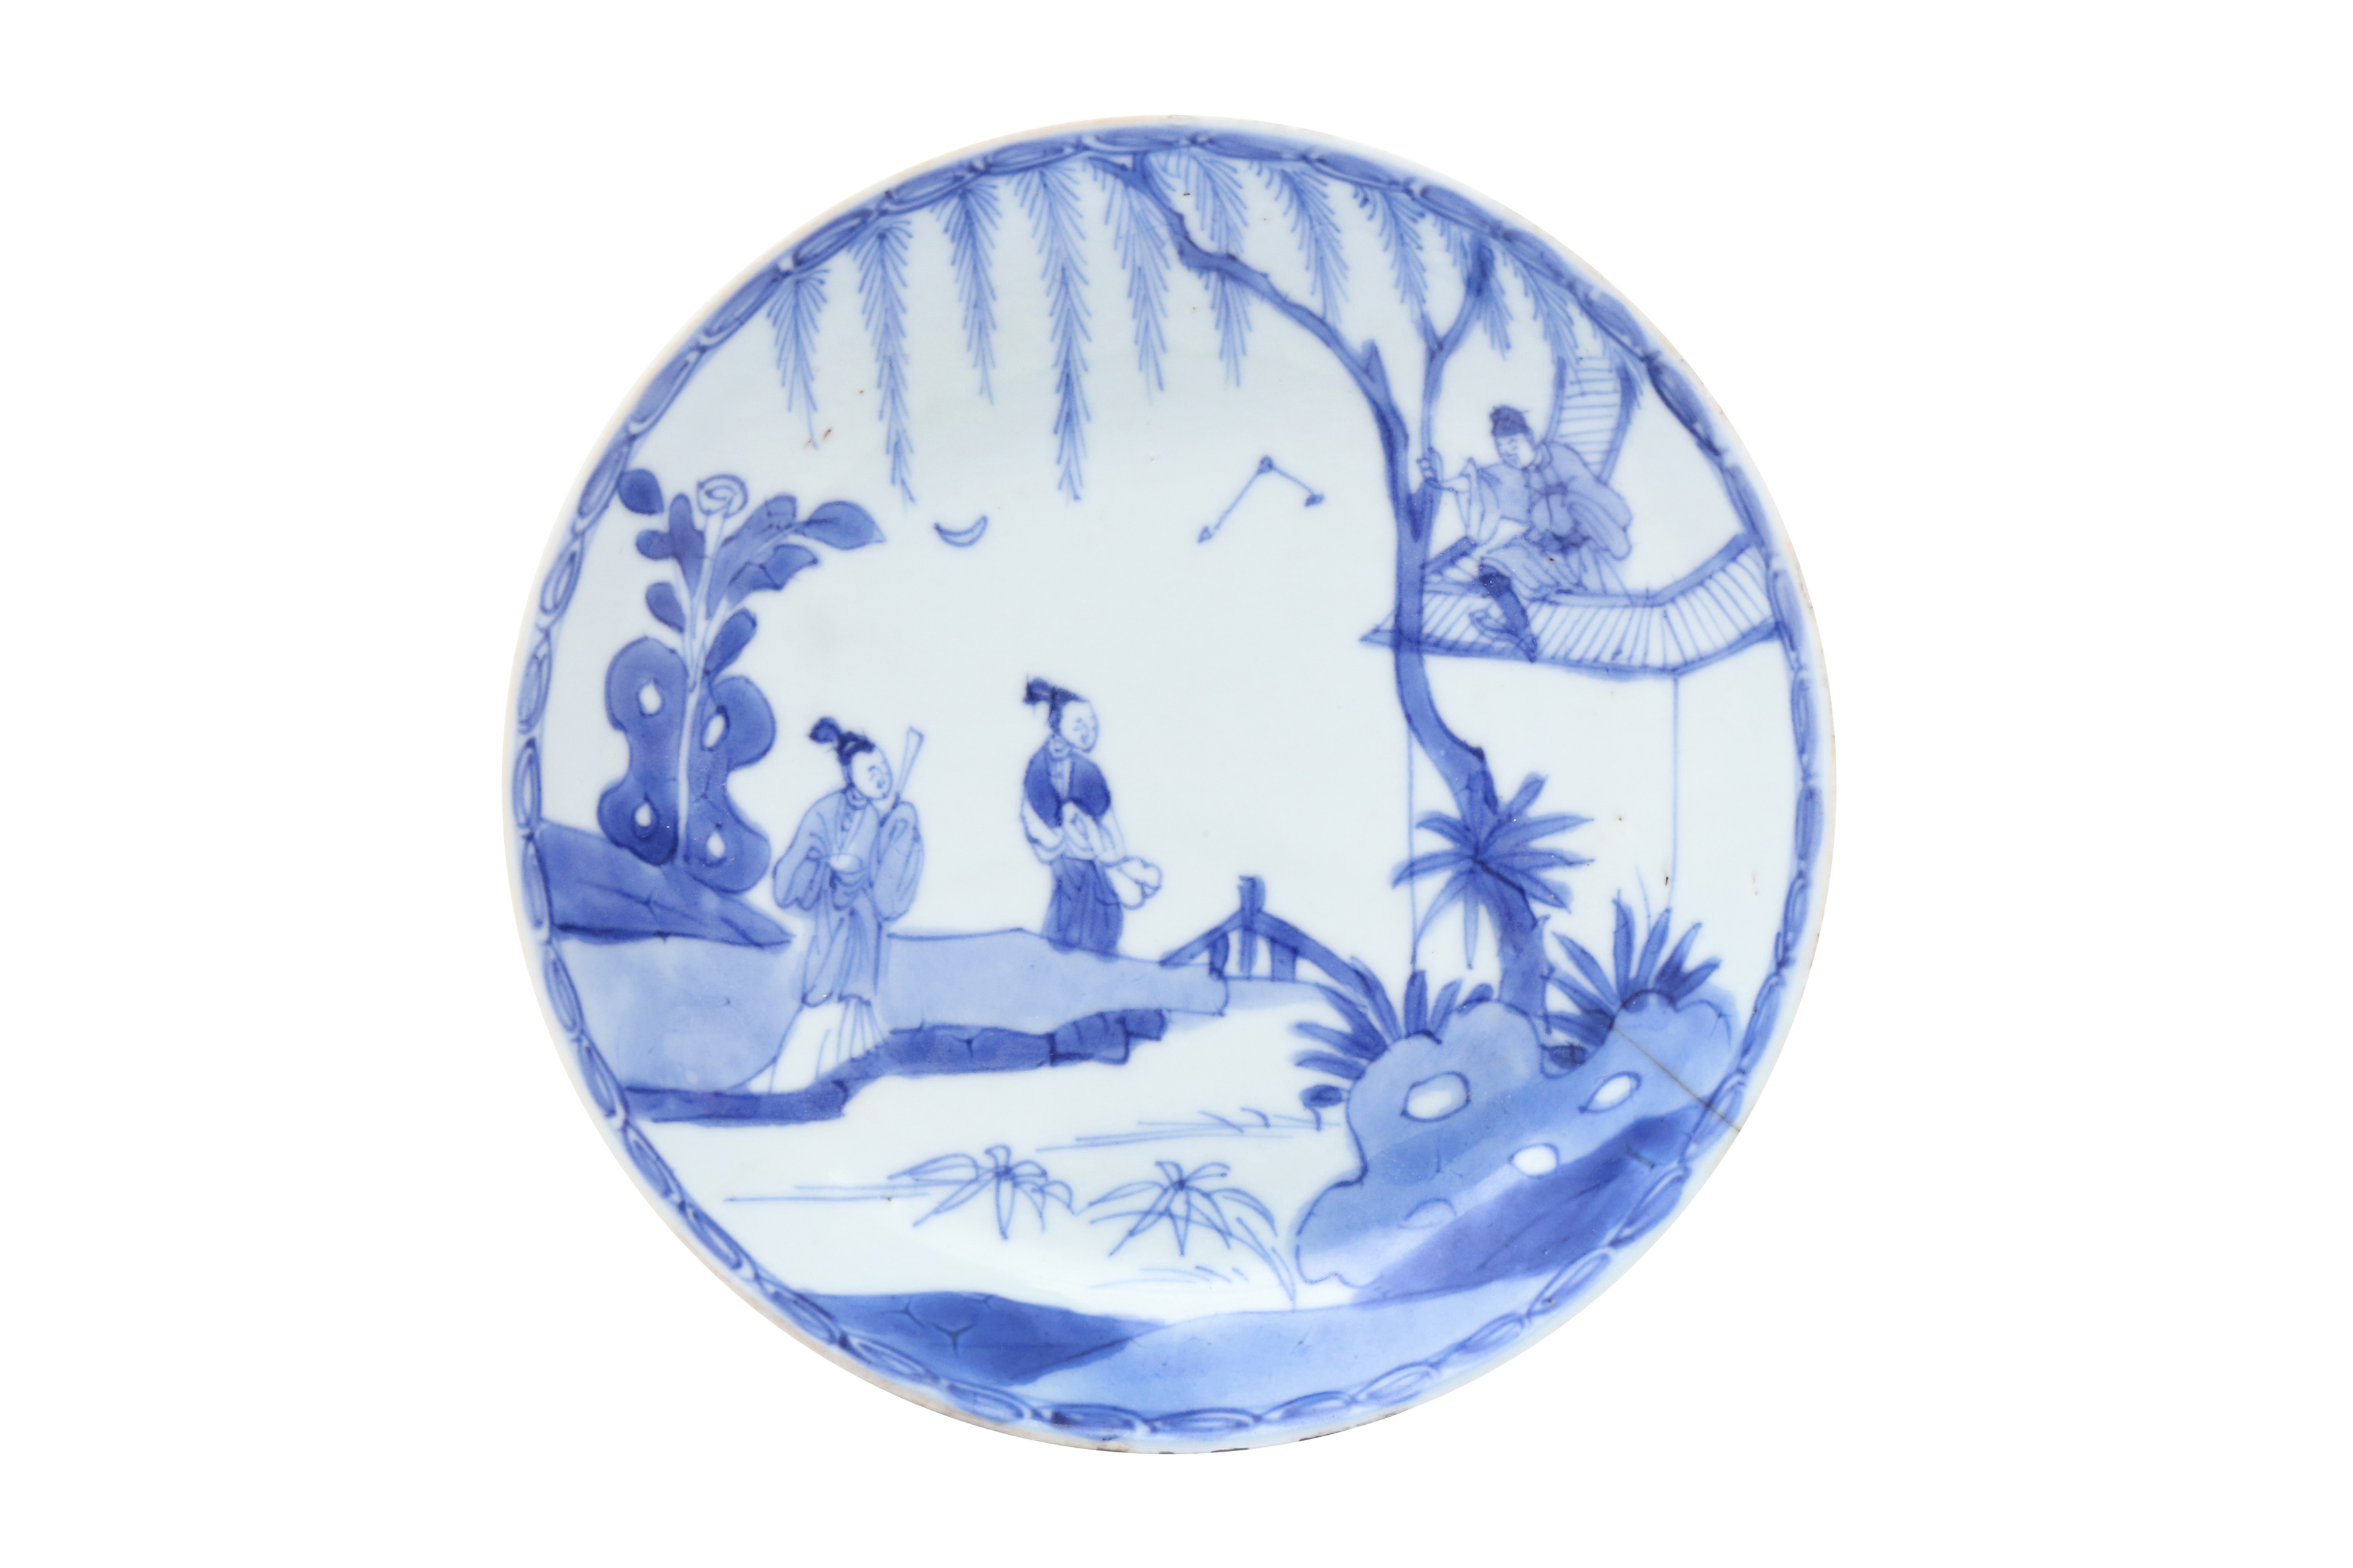 A CHINESE BLUE AND WHITE 'ROMANCE OF THE WESTERN CHAMBER' DISH 清康熙 青花繪西廂記人物故事圖盤